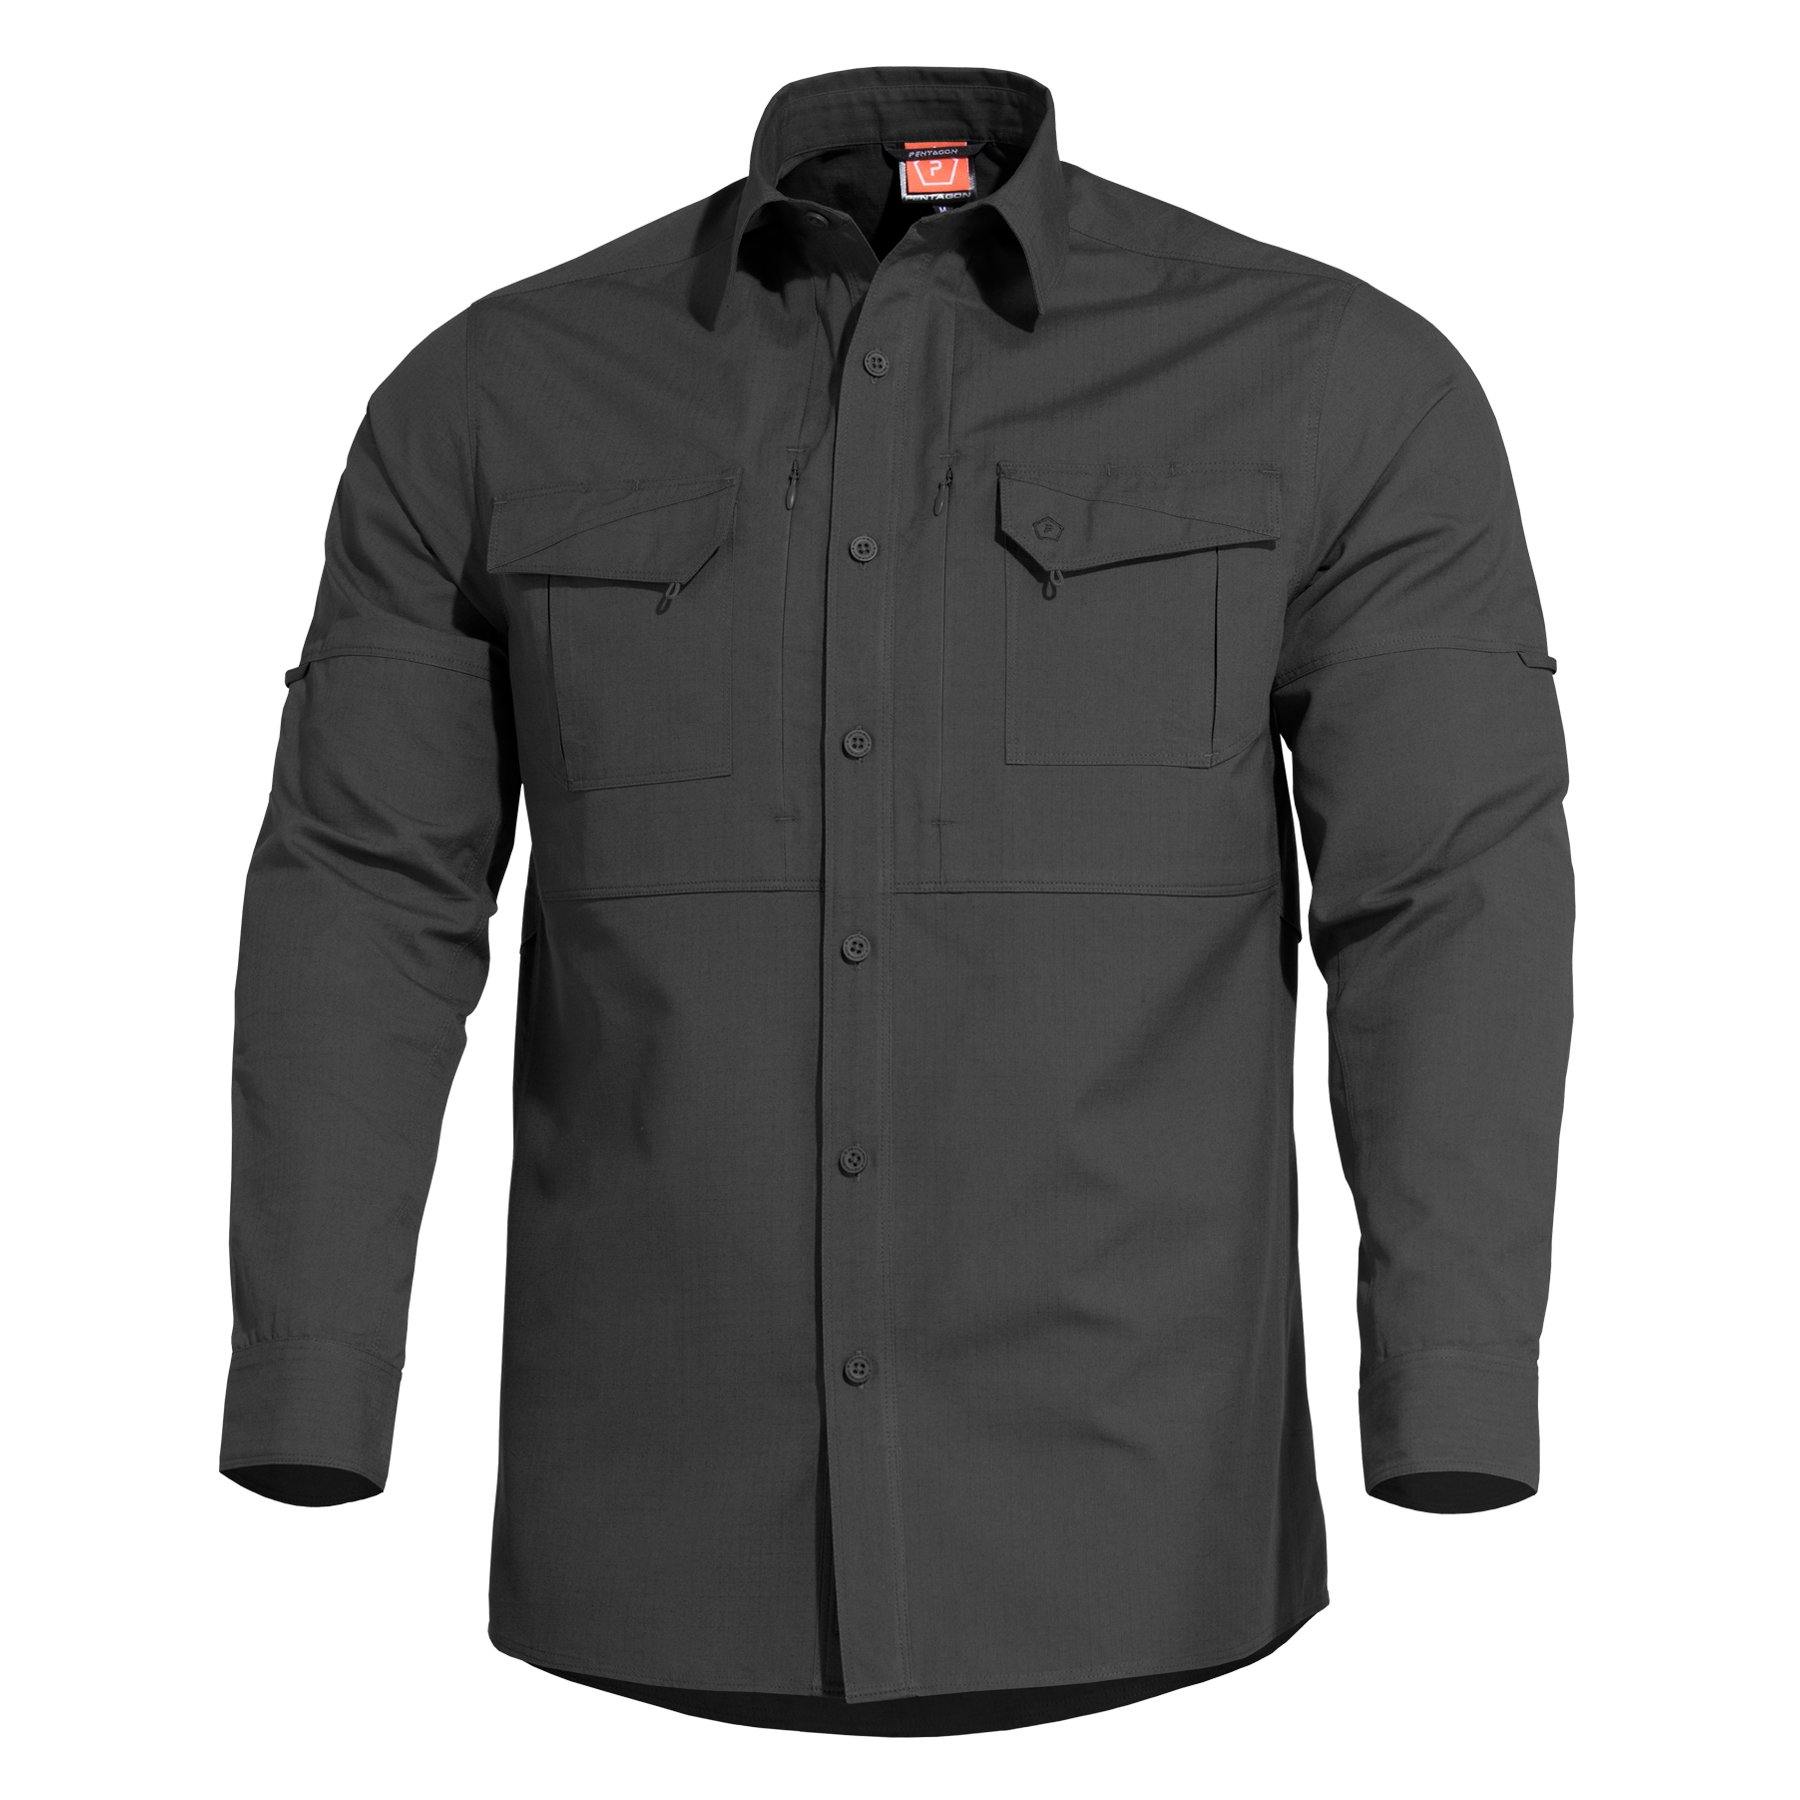 Pentagon - PLATO Long Sleeve Tactical Shirt